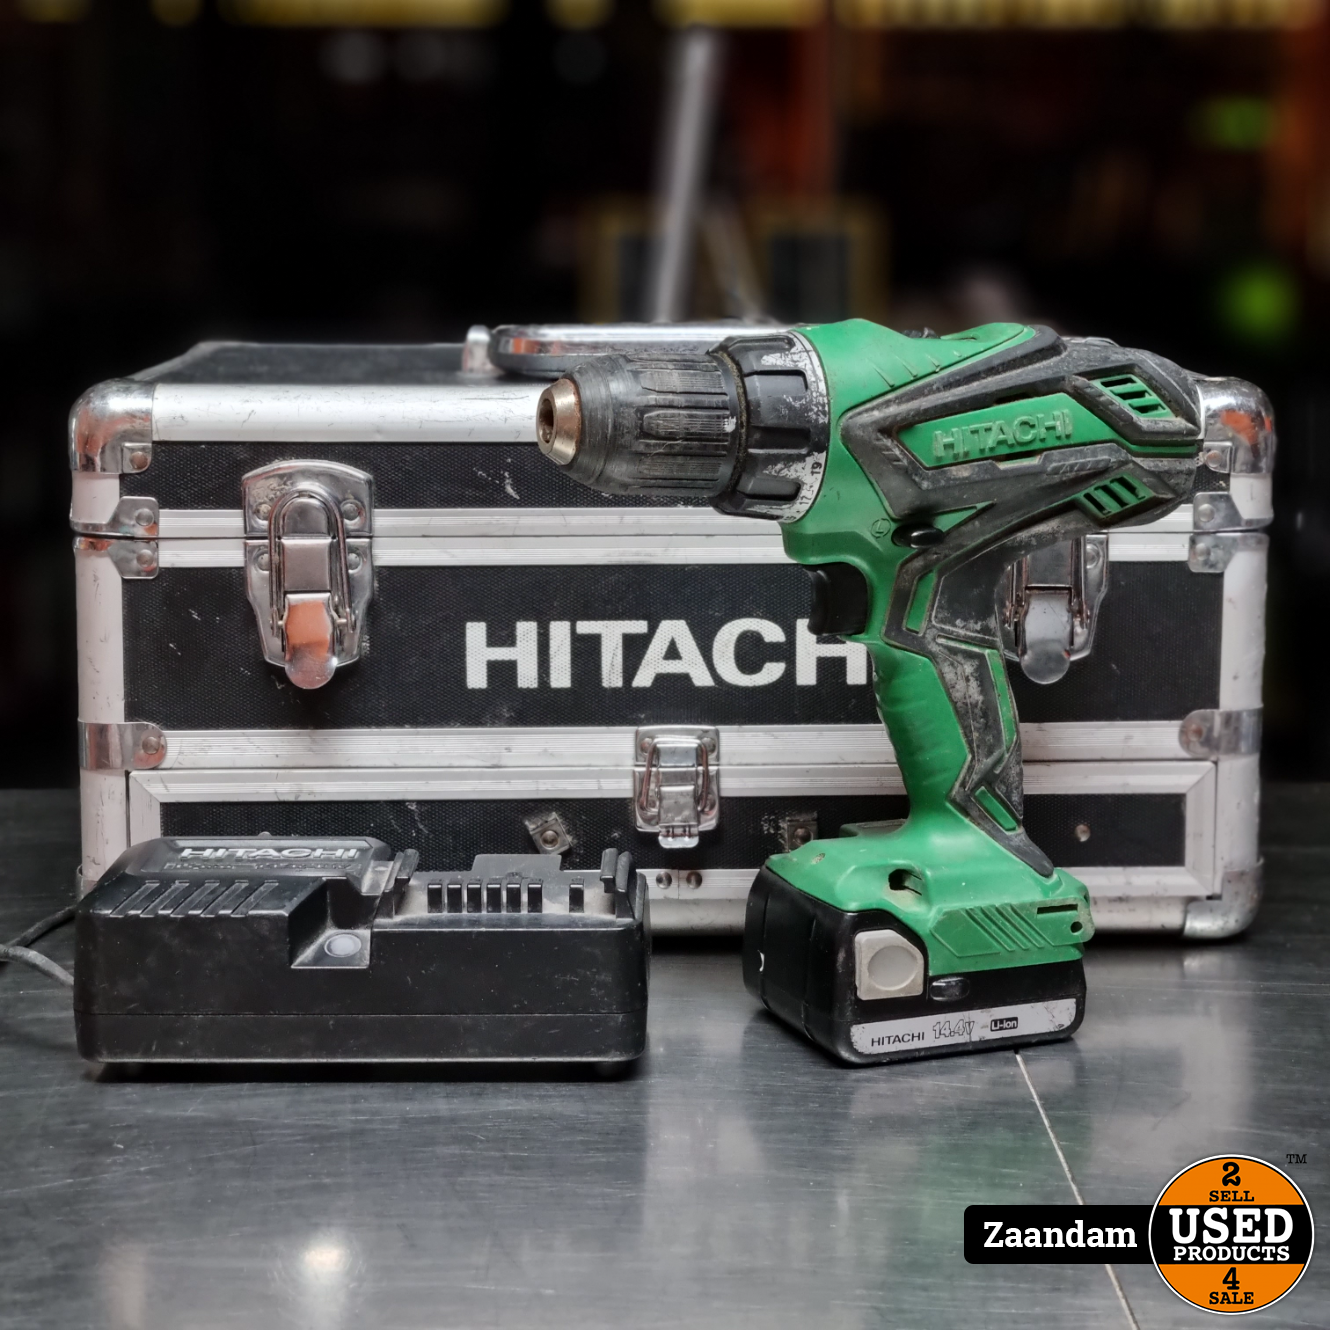 Hitachi DS14DJL Schroef Boormachine | In koffer Used Products Zaandam